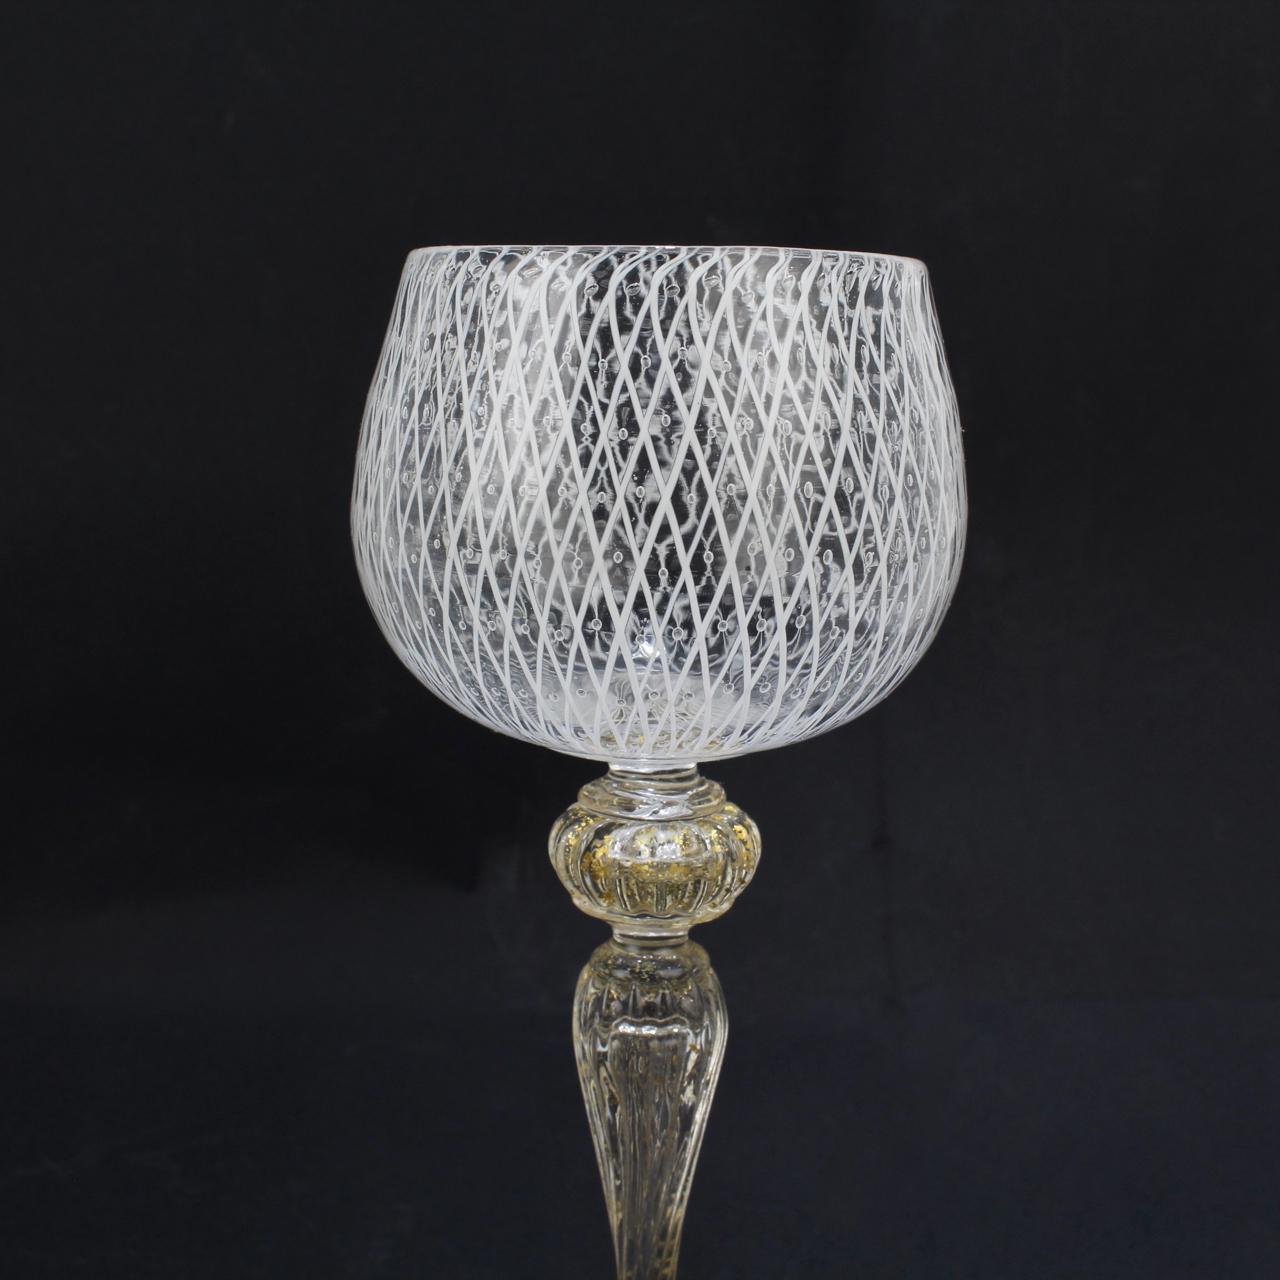 20th Century Set of 10 Venetian or Murano Glass Reticulo Filigrana Decorated Wine Glasses